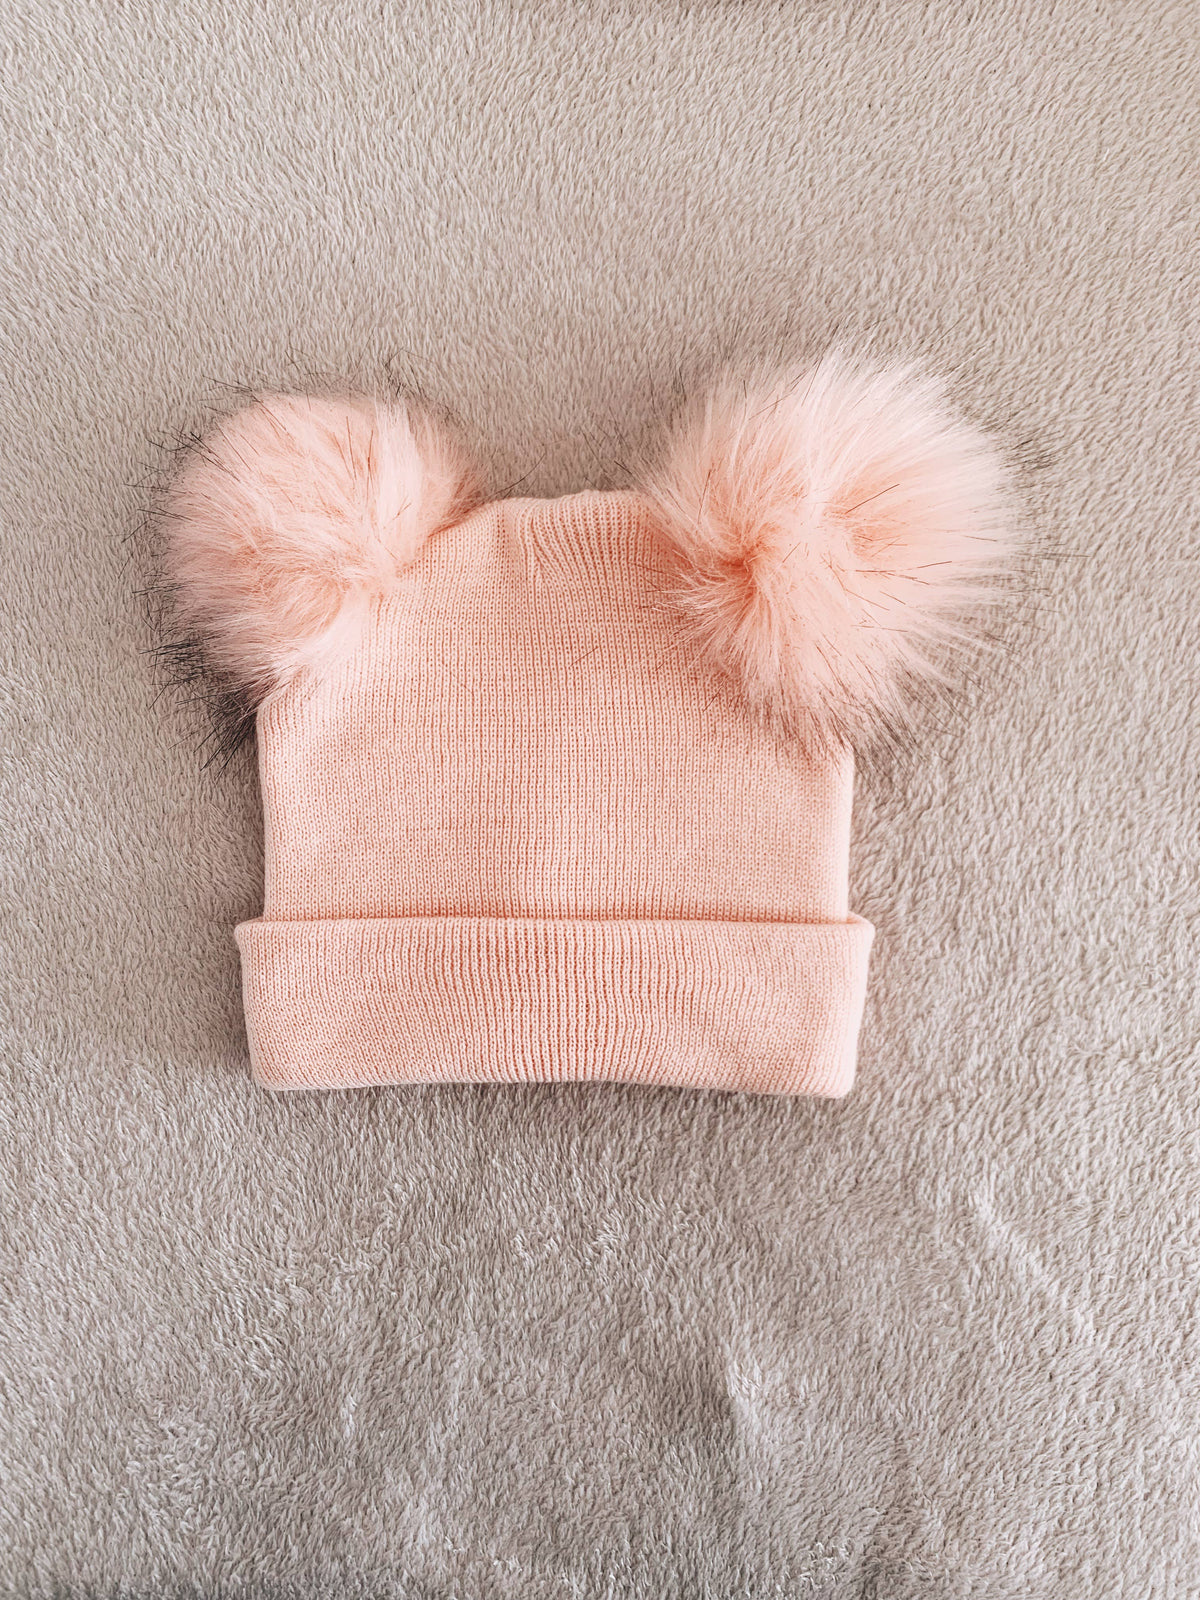 Pom Pom Baby/Kid's Beanie Hat, Newborn to 8 Years, Unisex